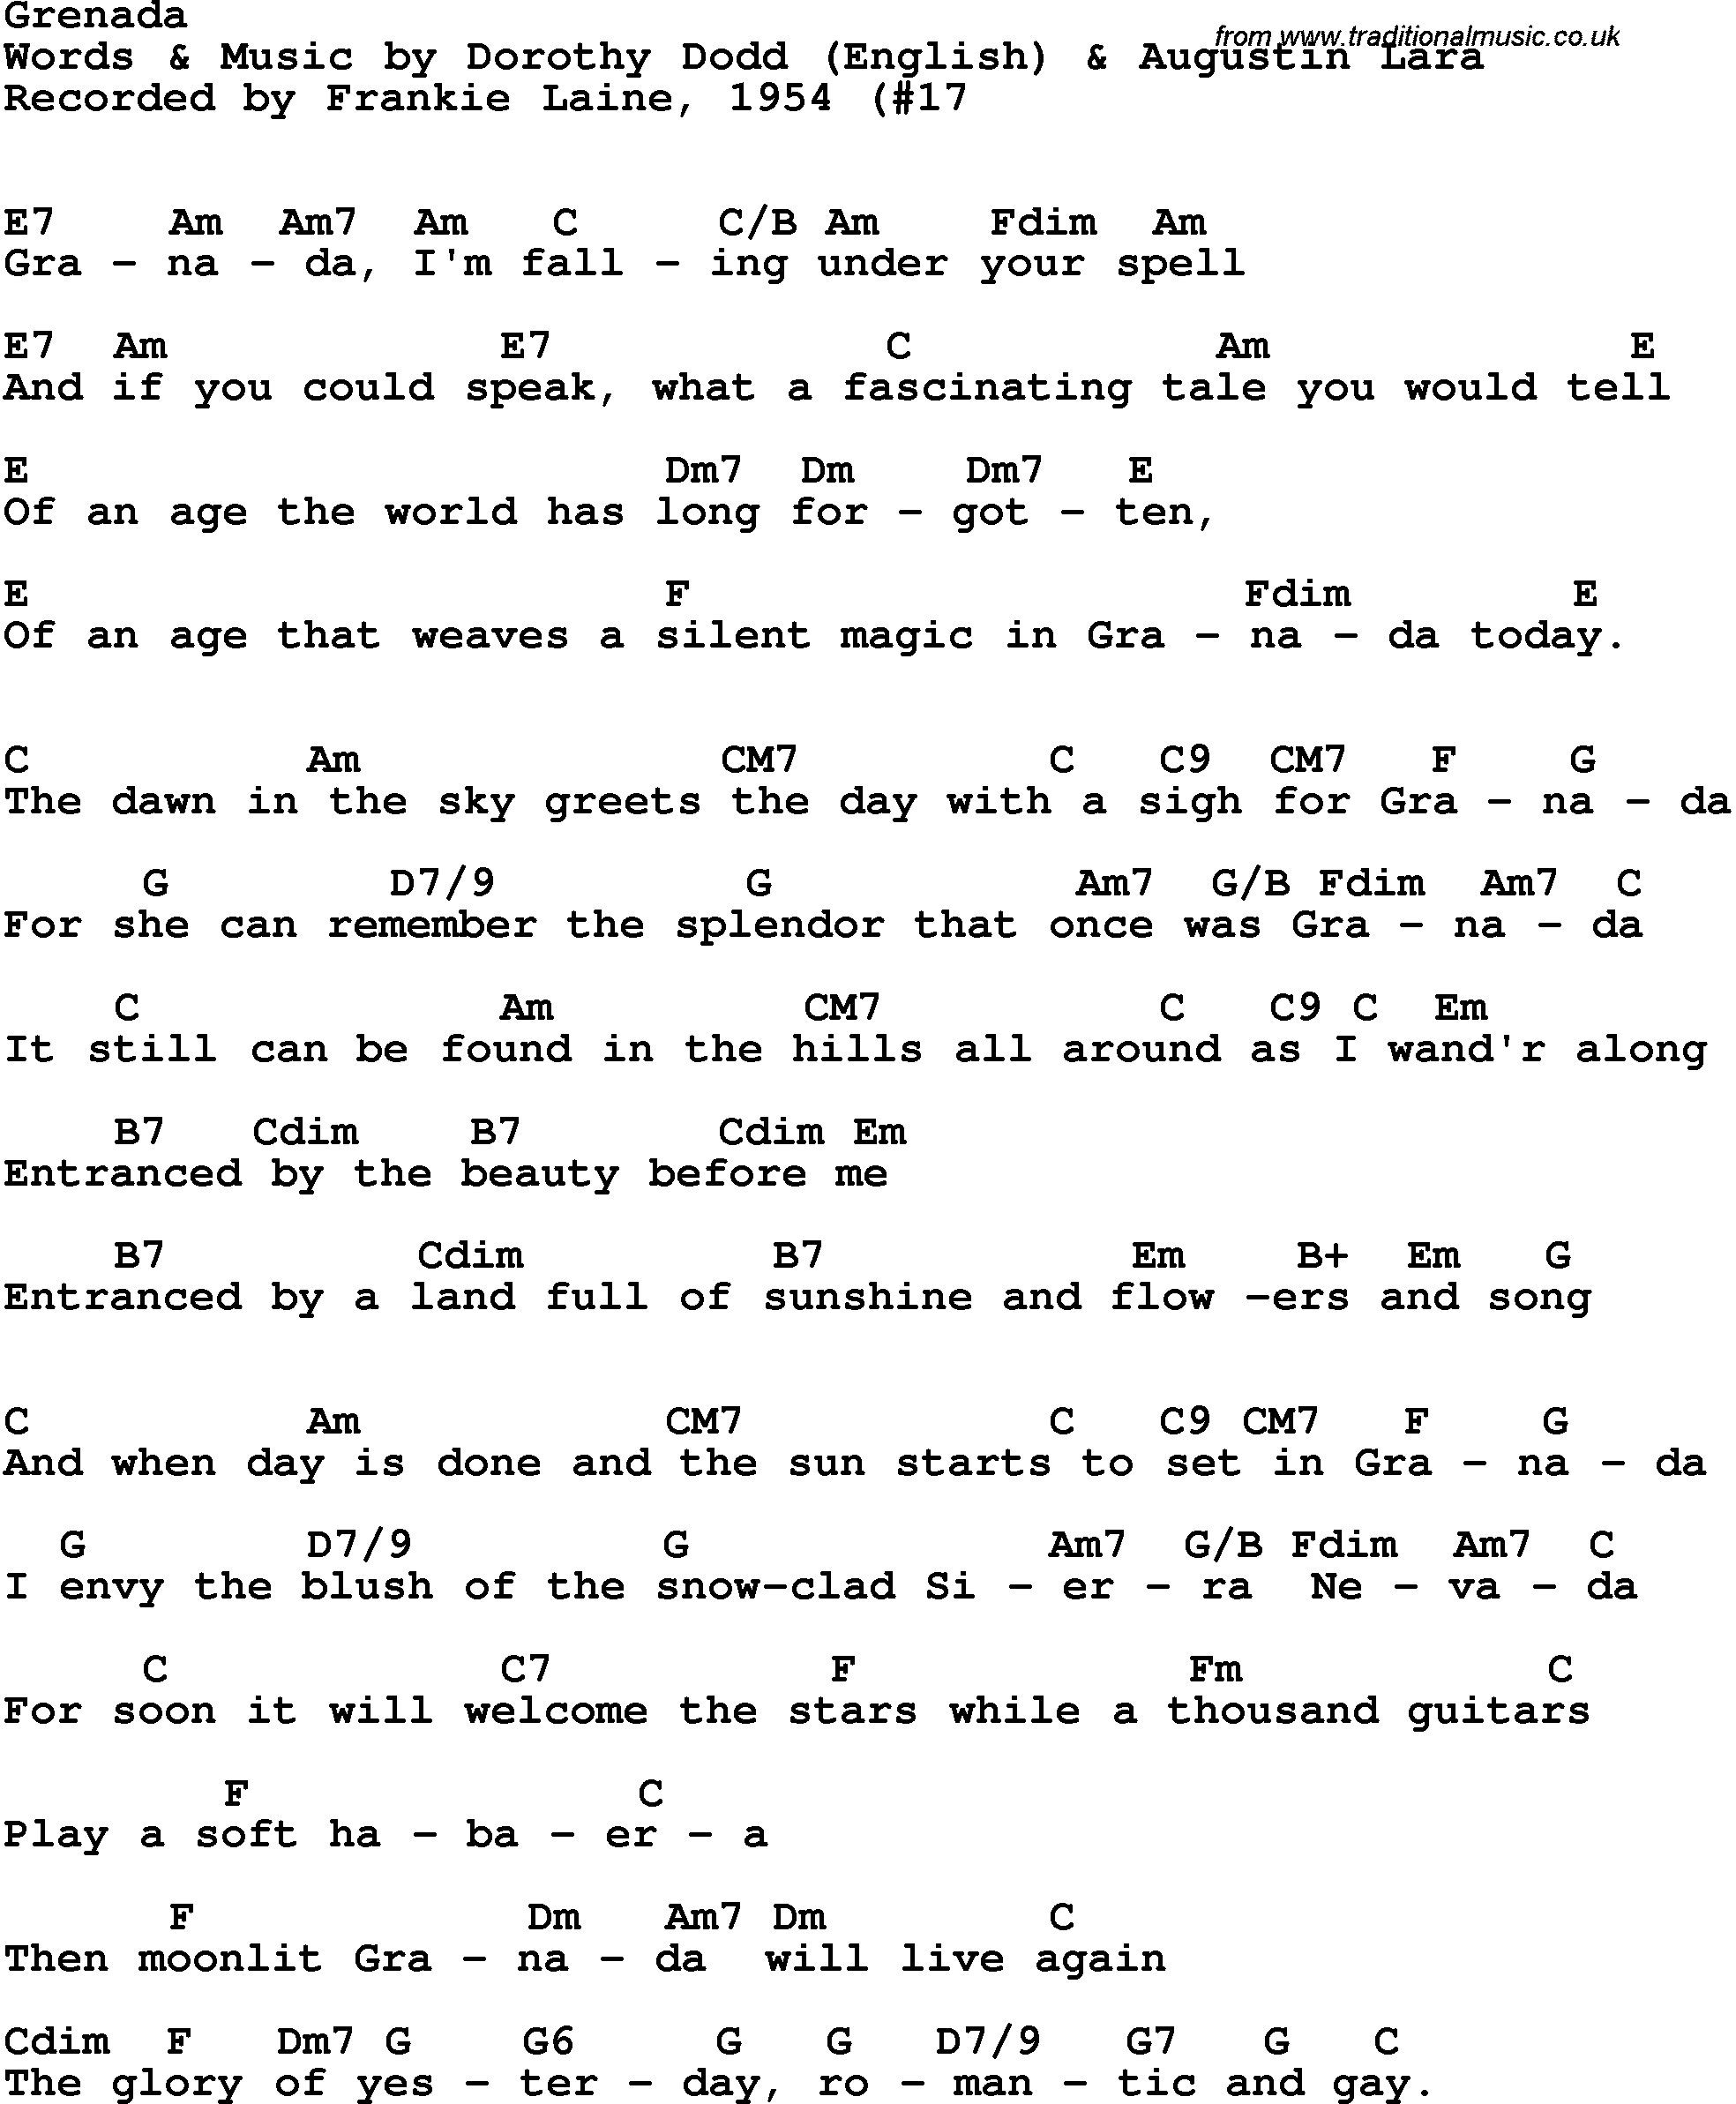 Song Lyrics with guitar chords for Granada - Frankie Laine, 1954